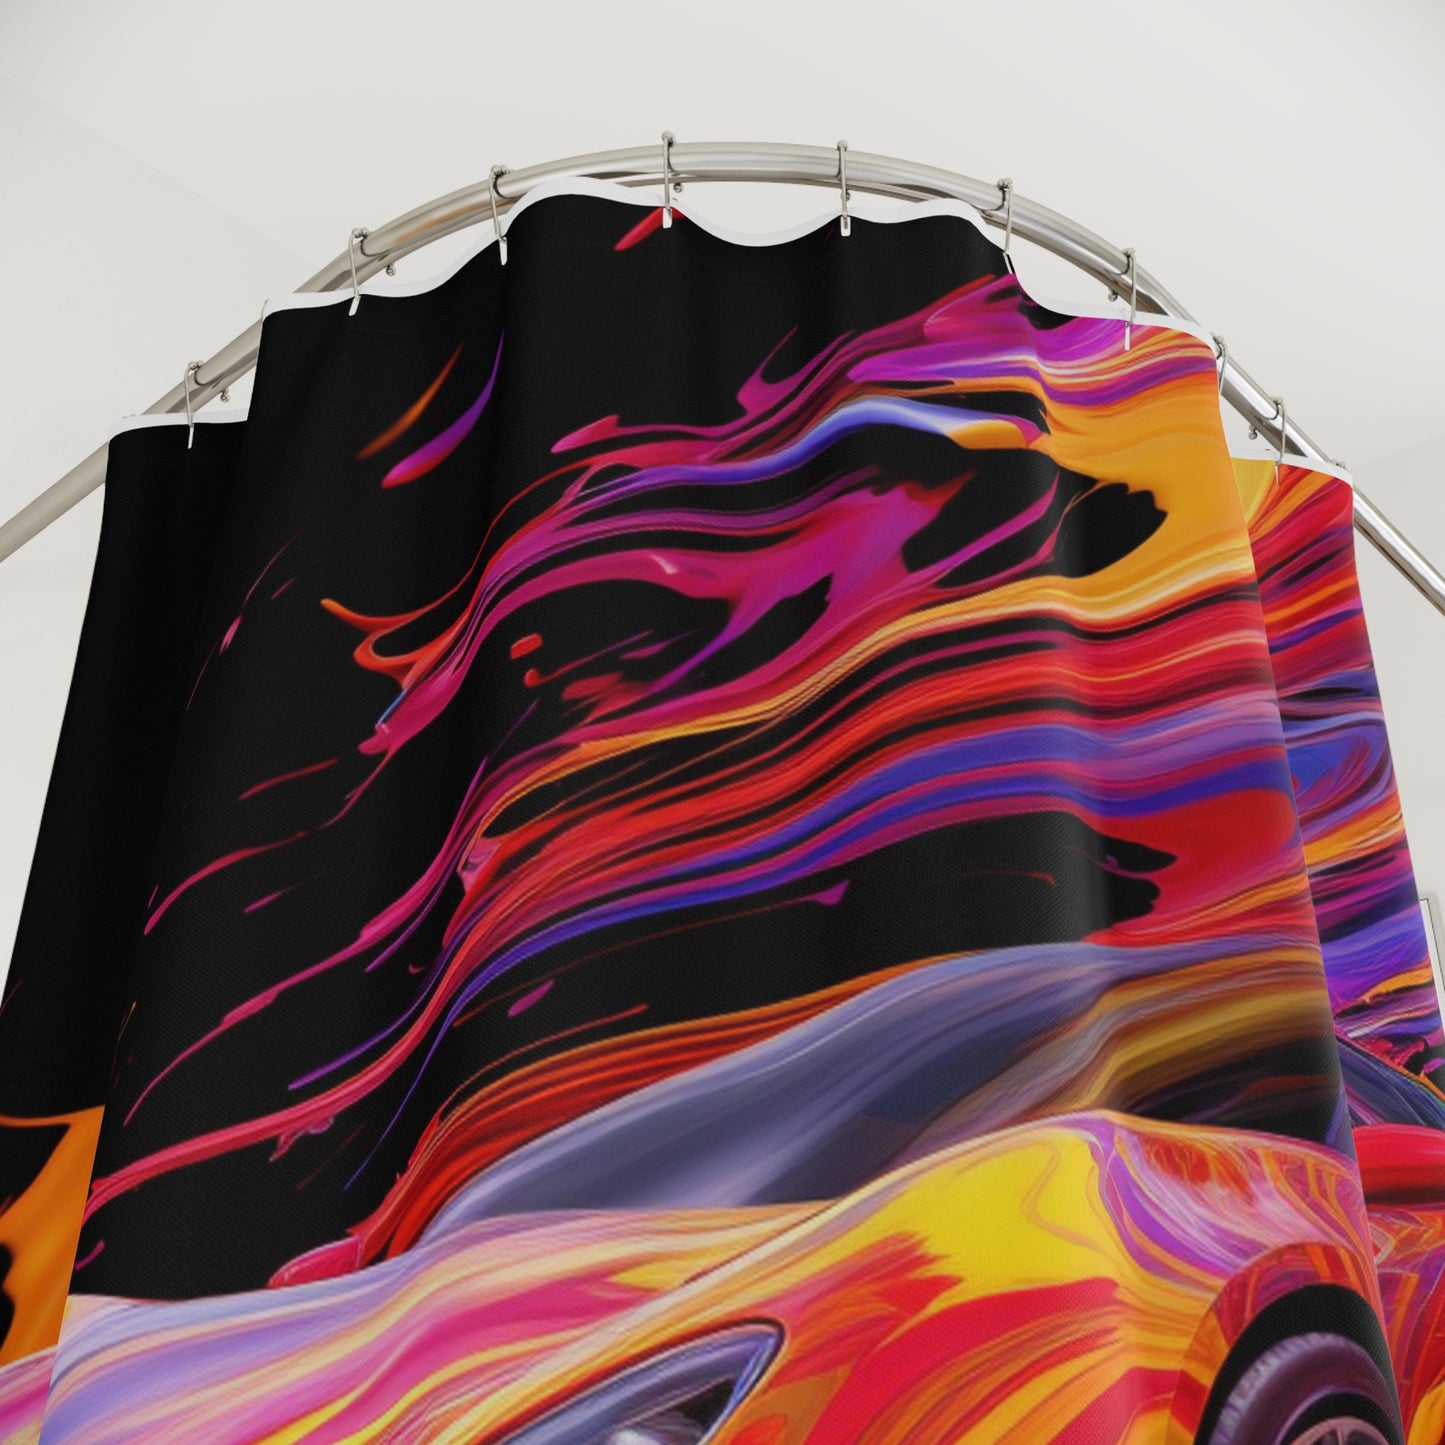 Polyester Shower Curtain Ferrari Water Fusion 2